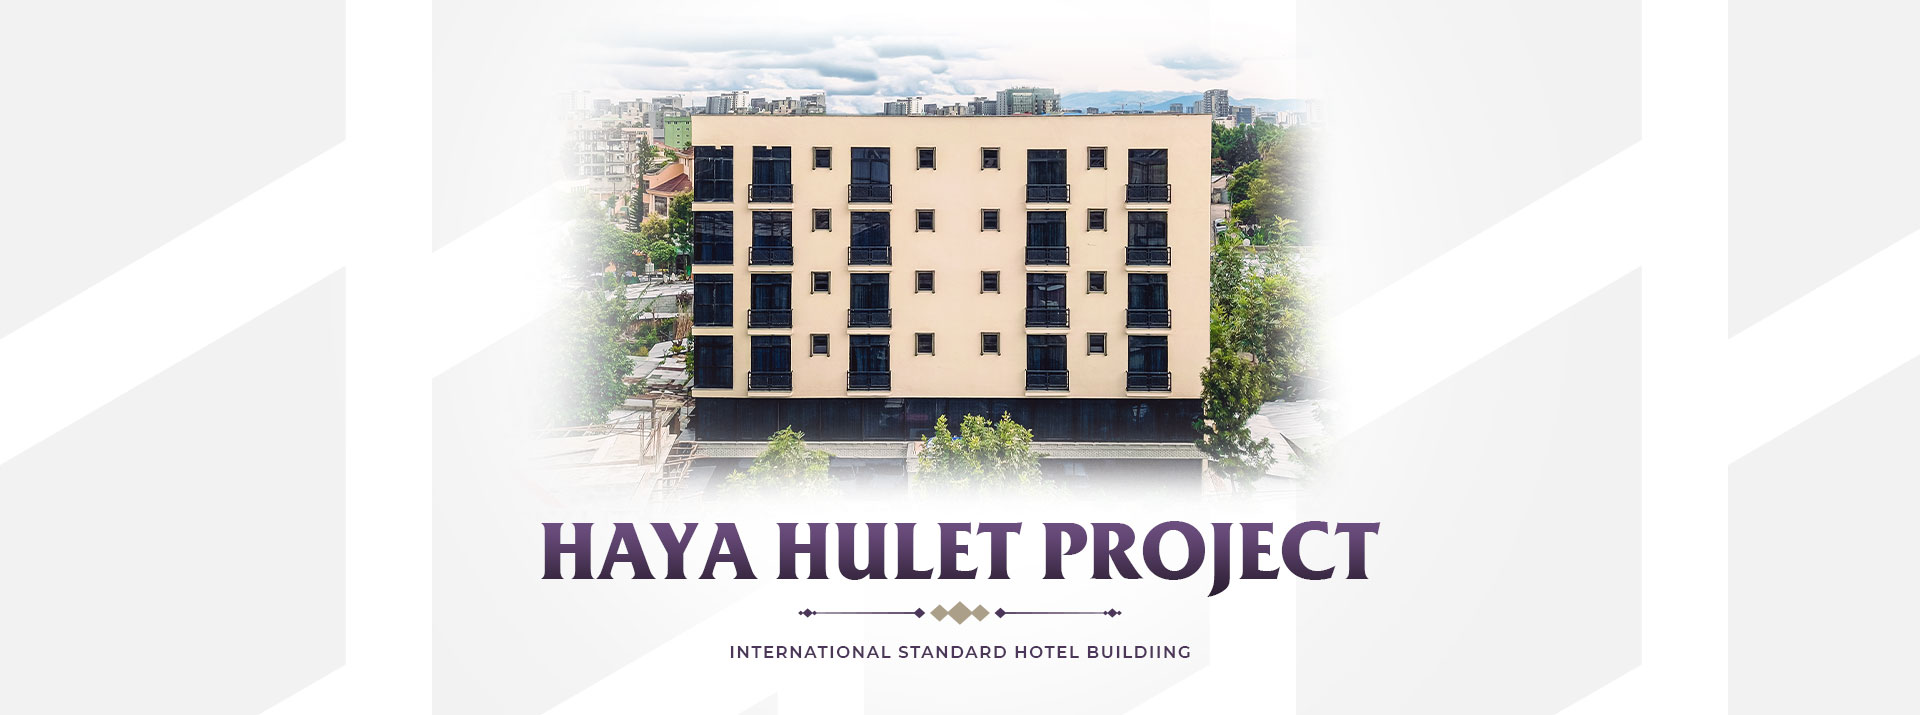 Haya-Hulet-Project-Slider-Photo-1.jpg